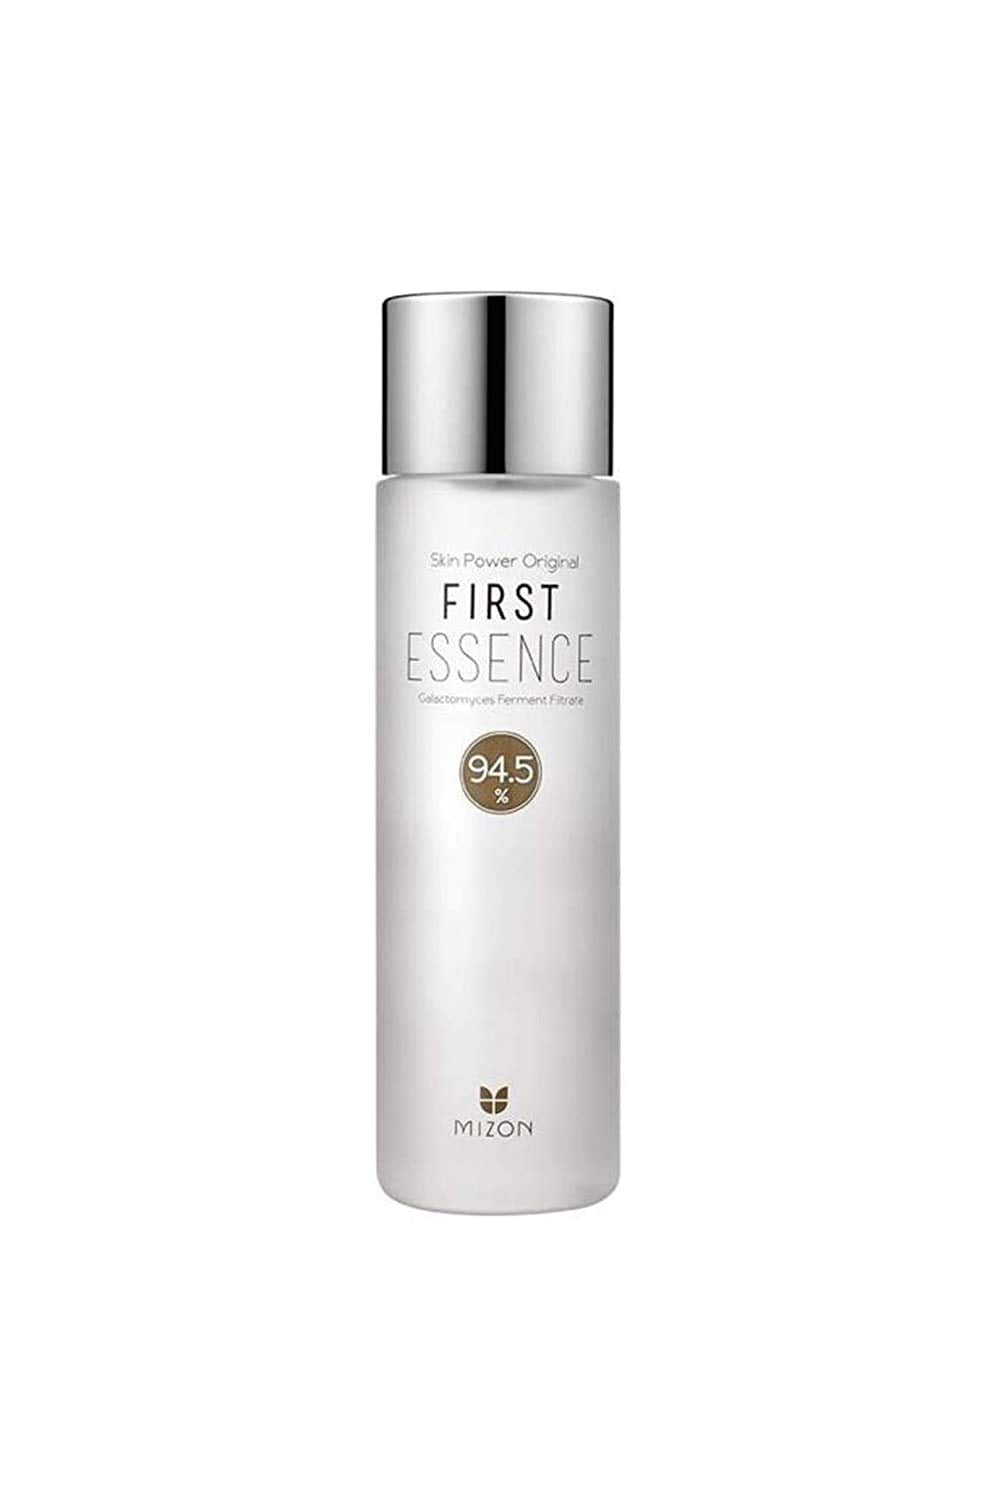 MIZON Skin Power Original First Essence, Facial Care, Antioxidant, moisturizing, firming, anti-aging (7.1  )